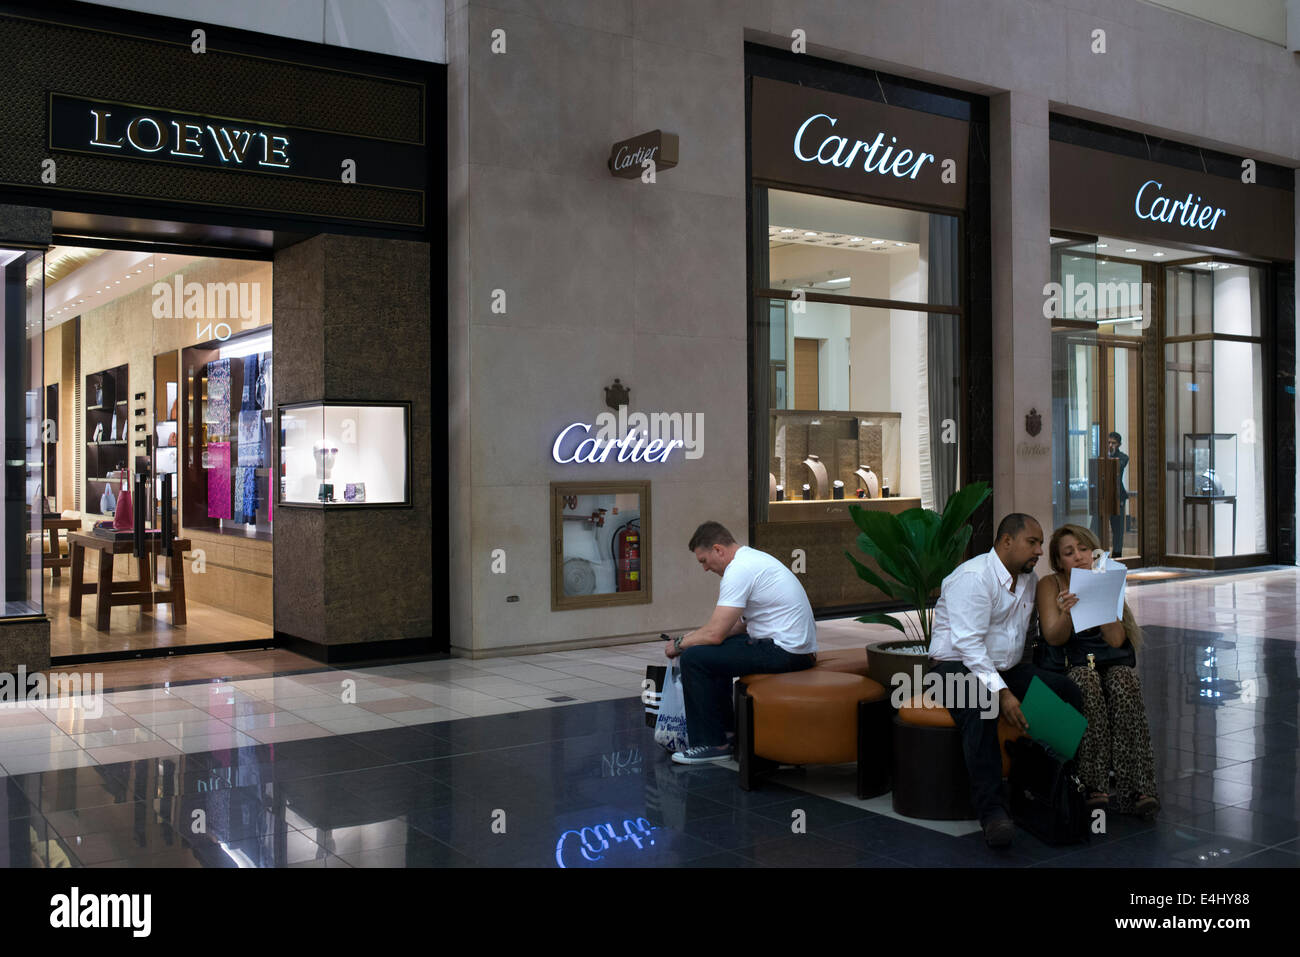 Panama Cartier loewe shops in Mall 